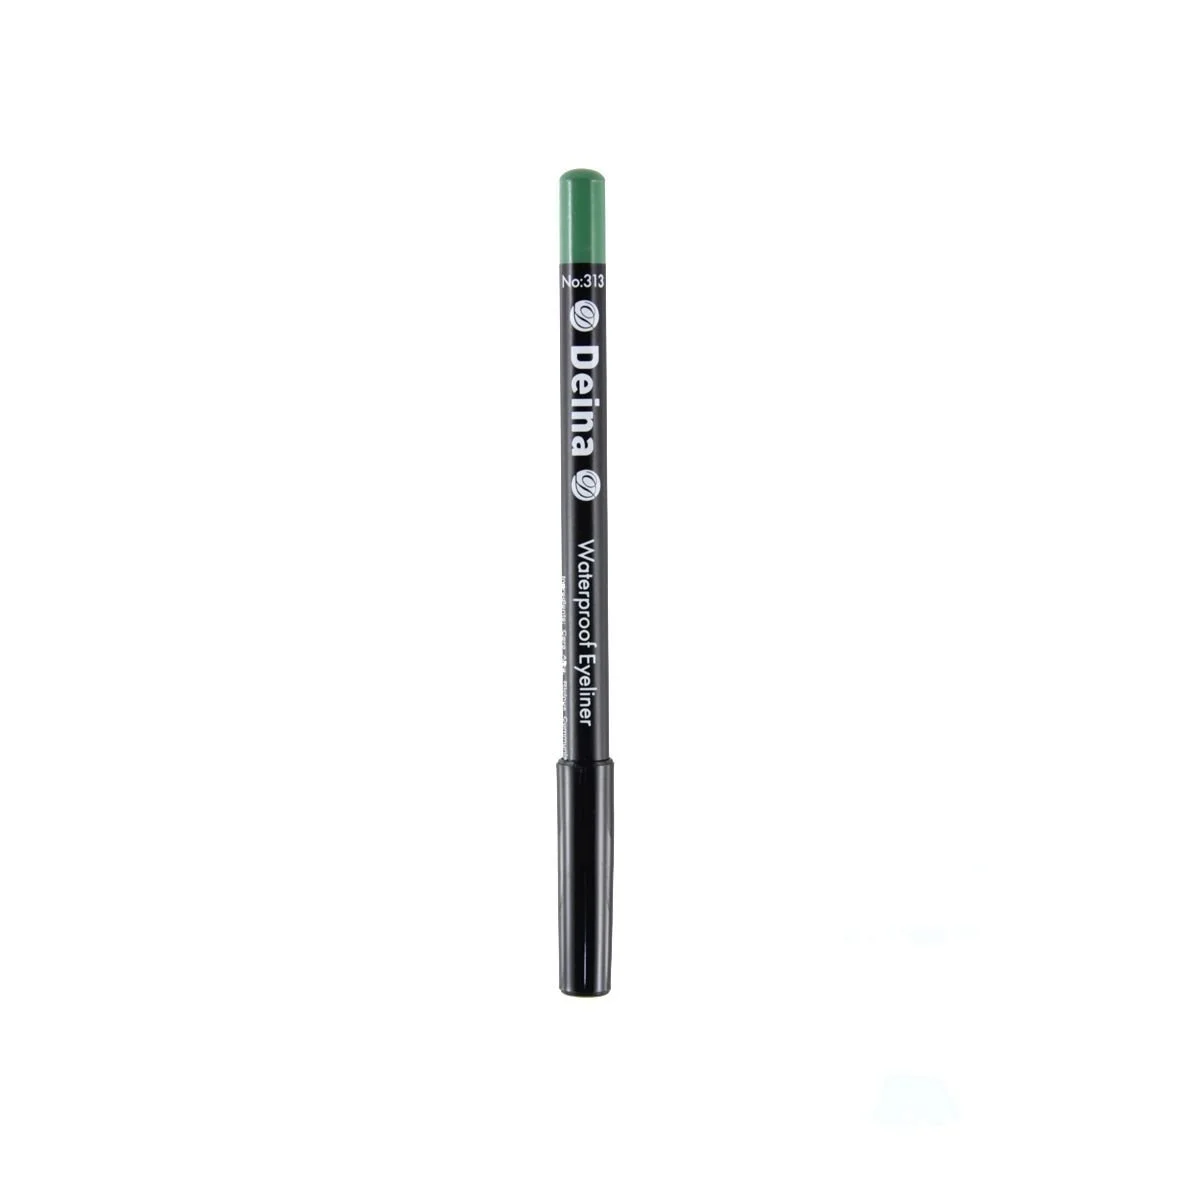 Style Turk, Deina Eye Pencil Waterproof Eyeliner - Green 313 Eye Pencil -  Lip Pencil